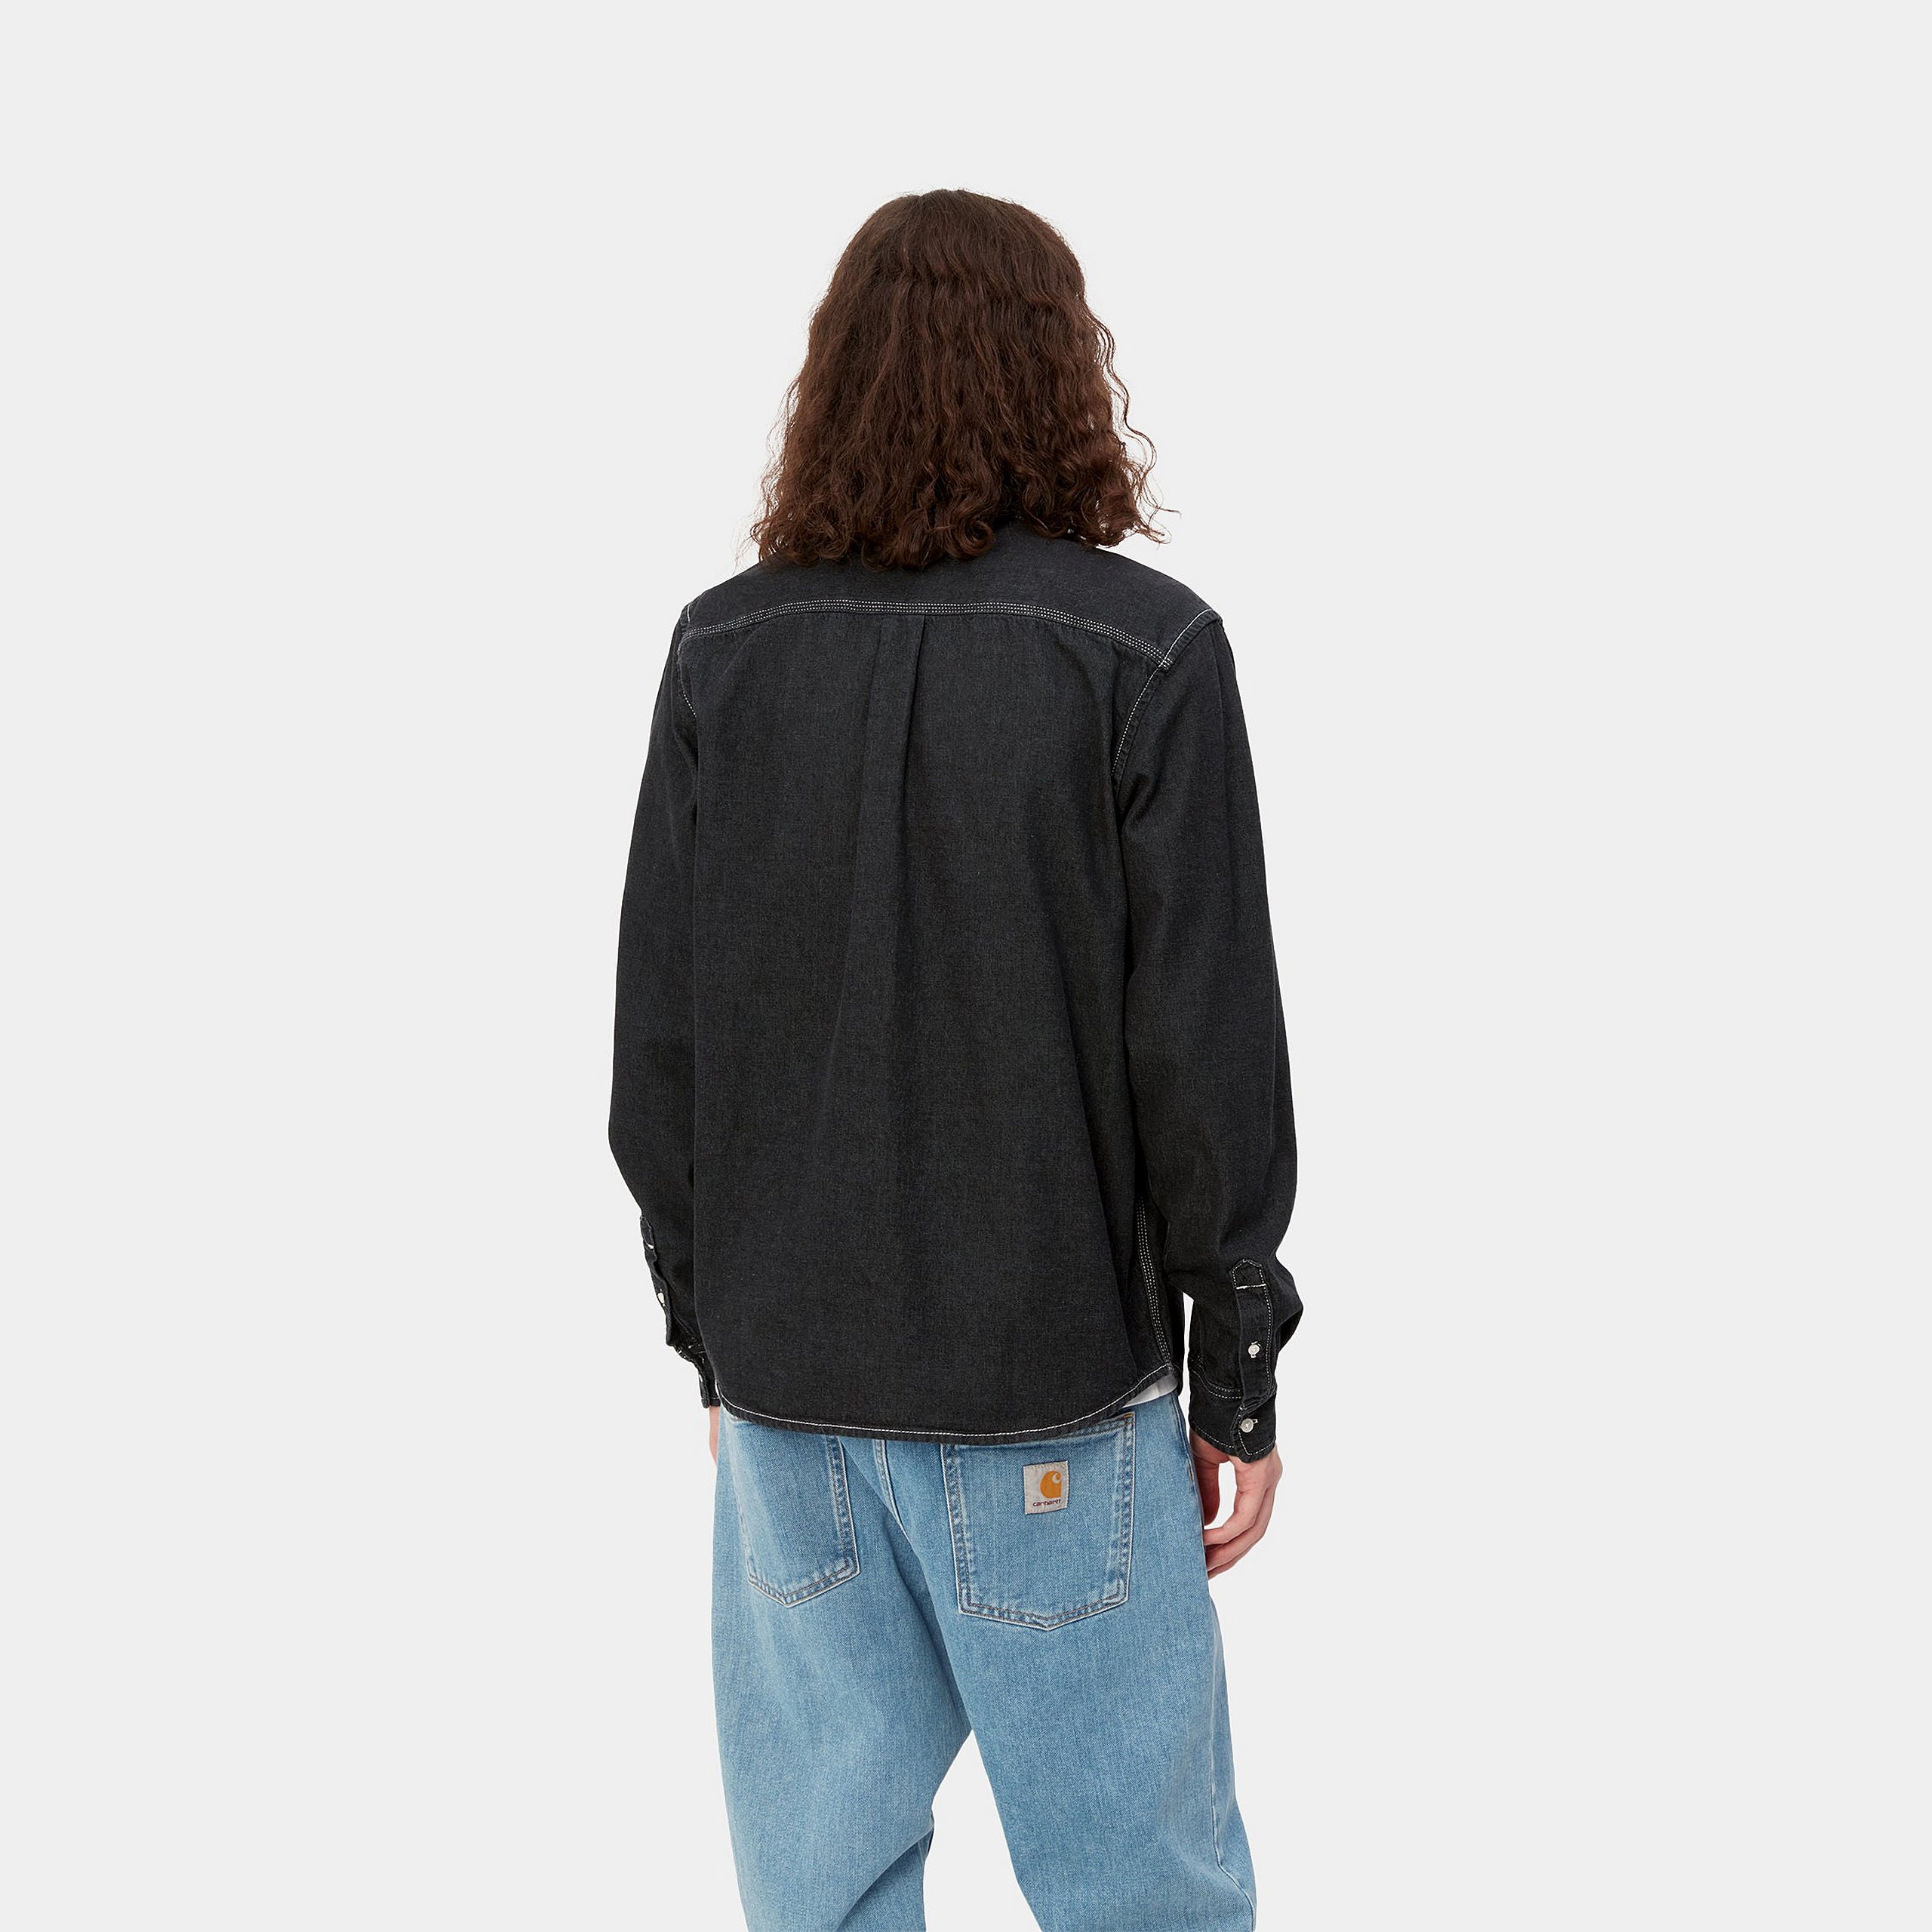 Weldon Long Sleeve Black Shirt-Back view